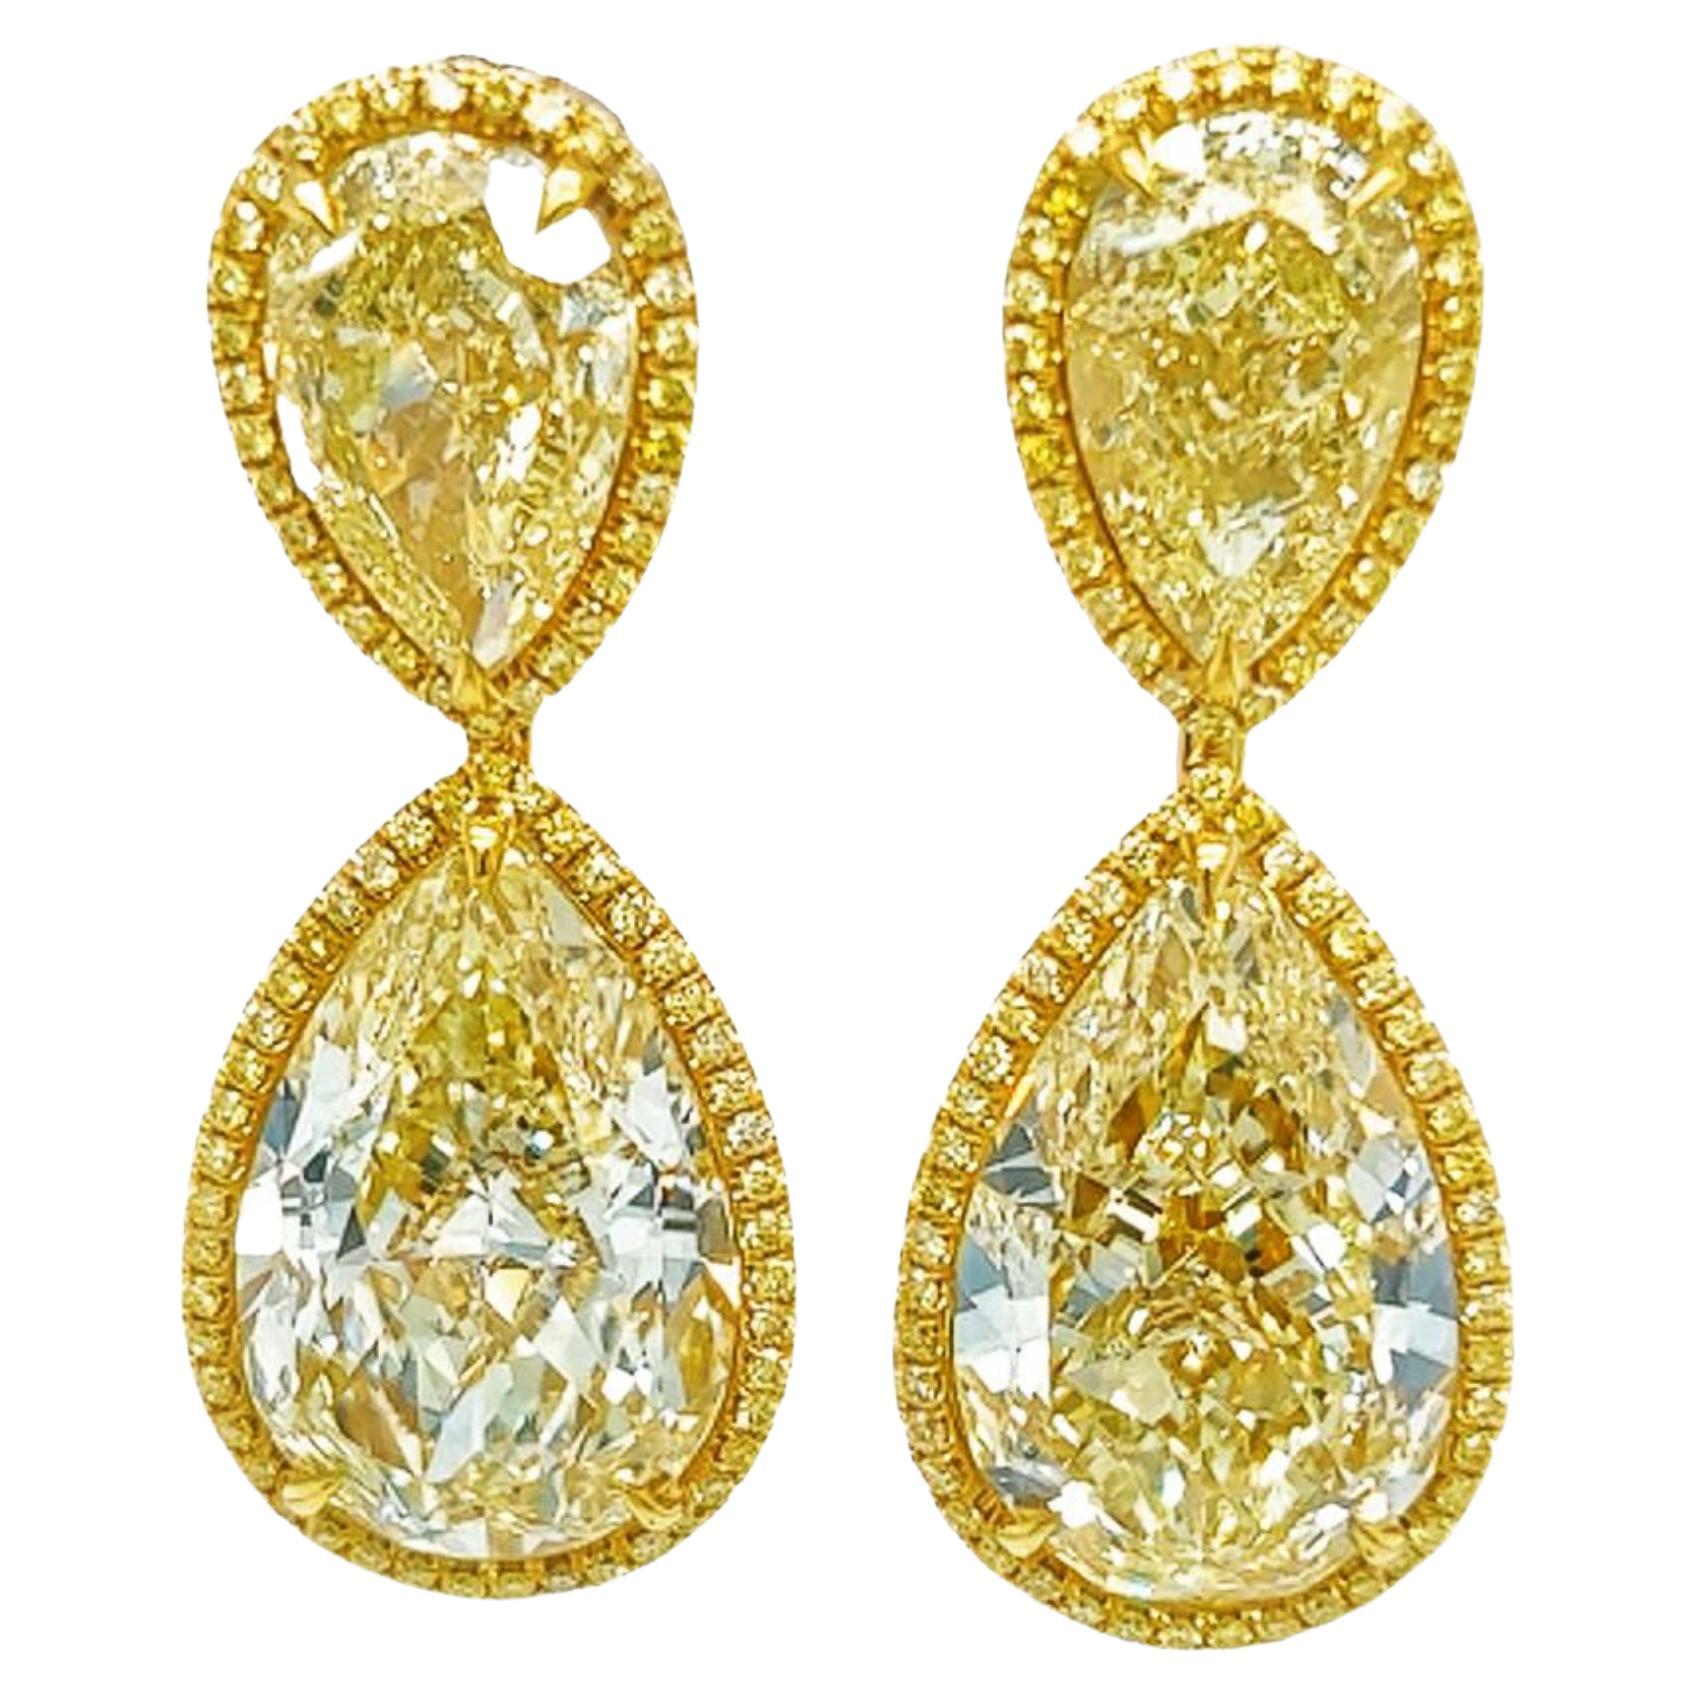 David Rosenberg 27.39 Carat Pear Shape Fancy Yellow GIA Diamond Drop Earrings